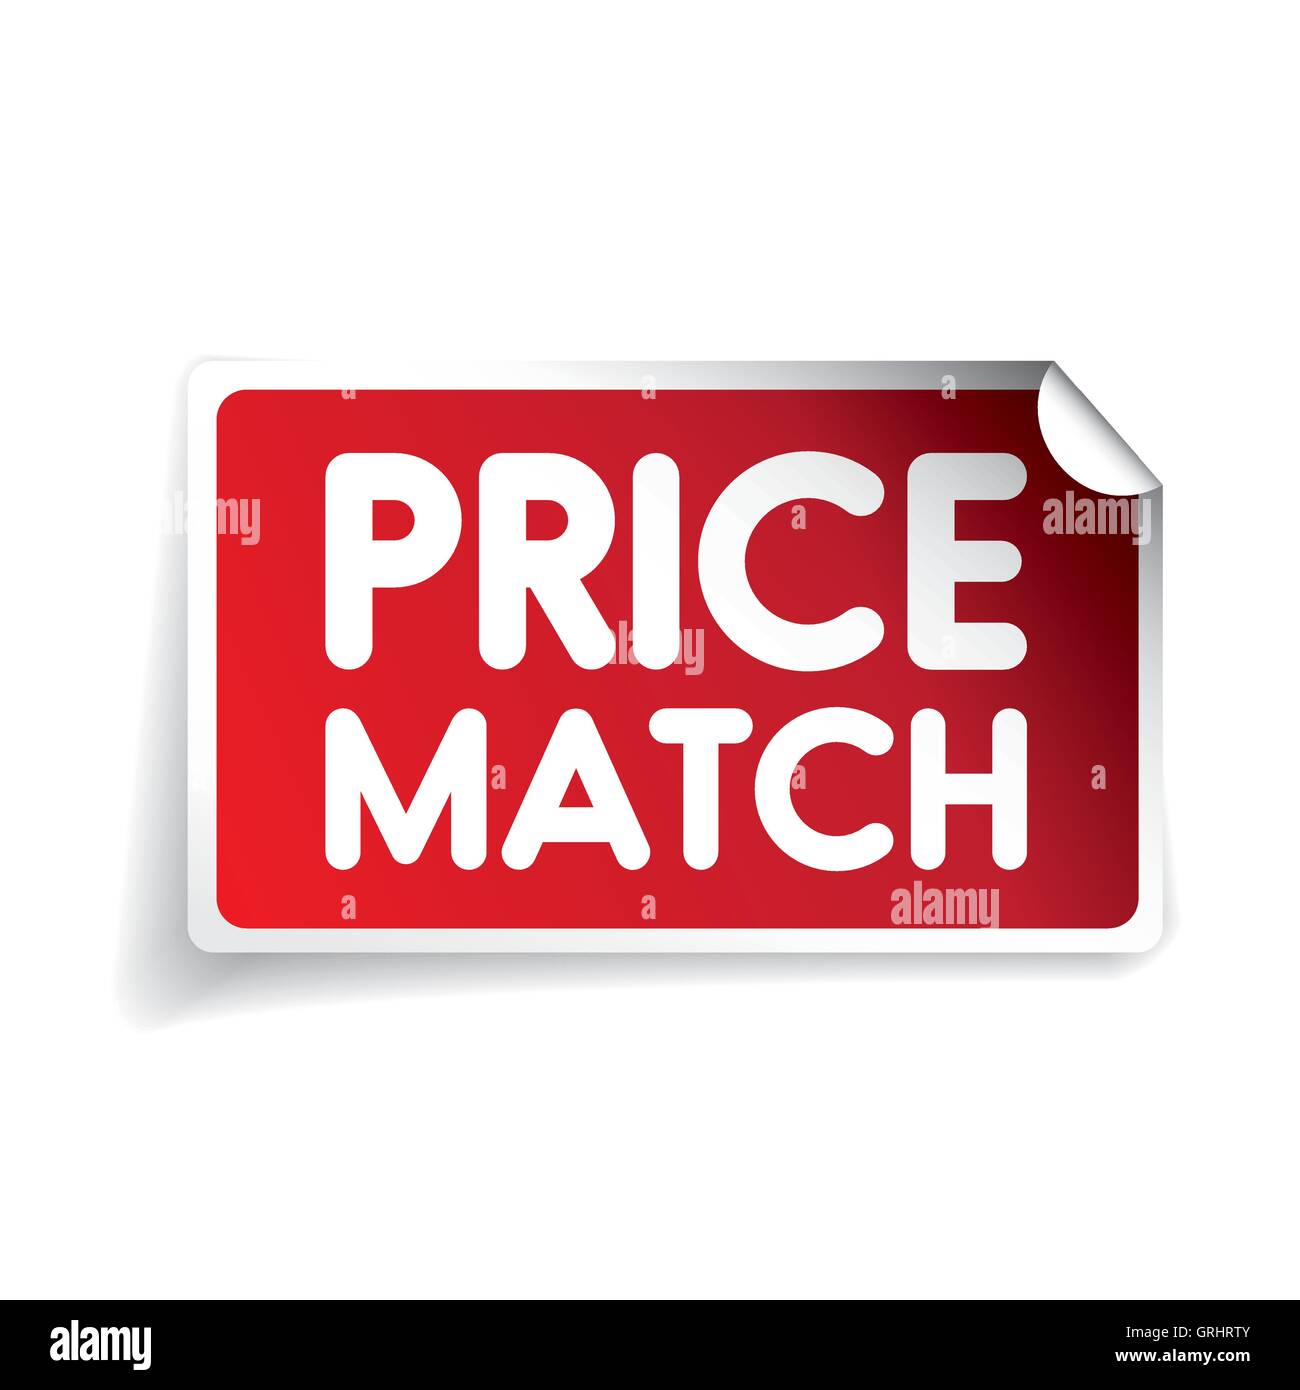 Price match label vector Stock Vector